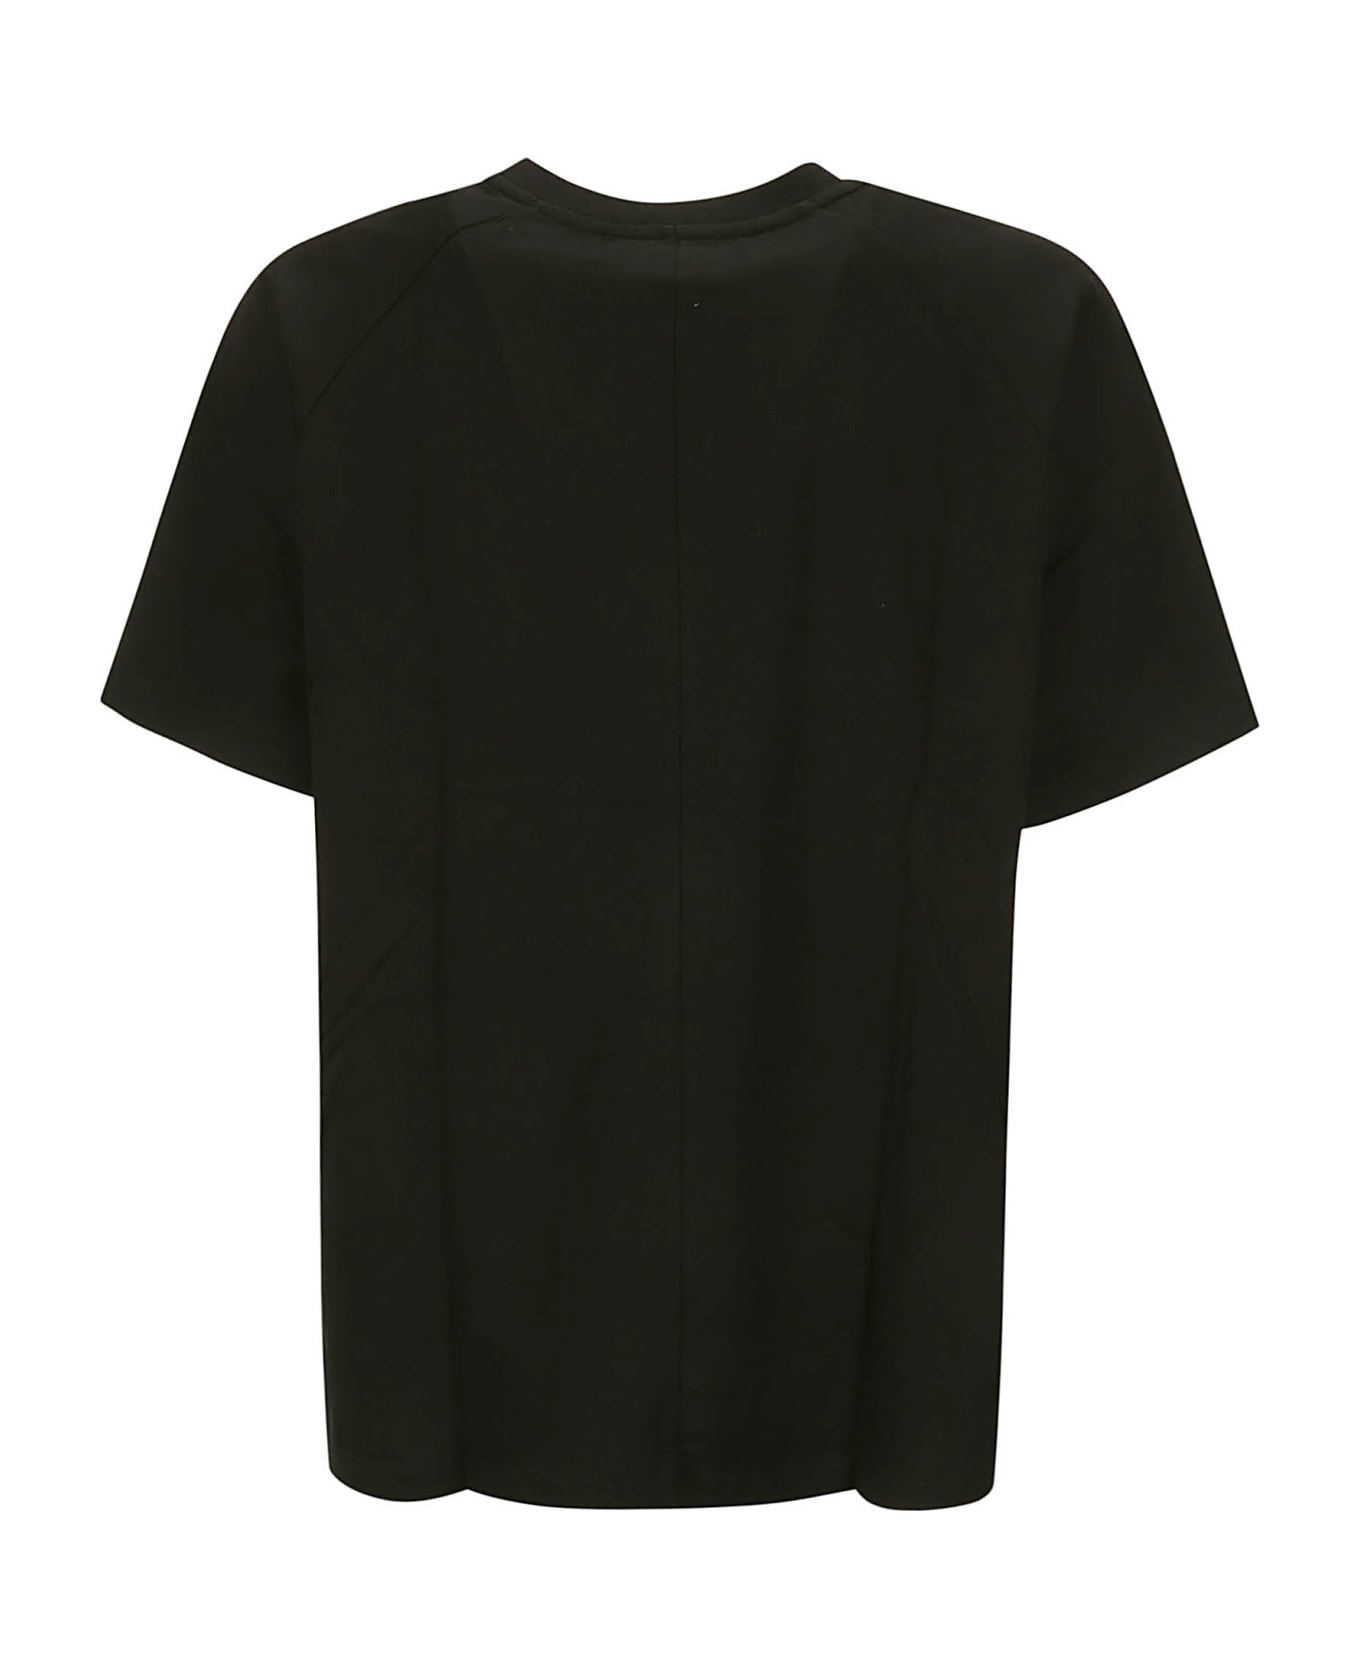 Heliot Emil Xylem T-shirt - BLACK